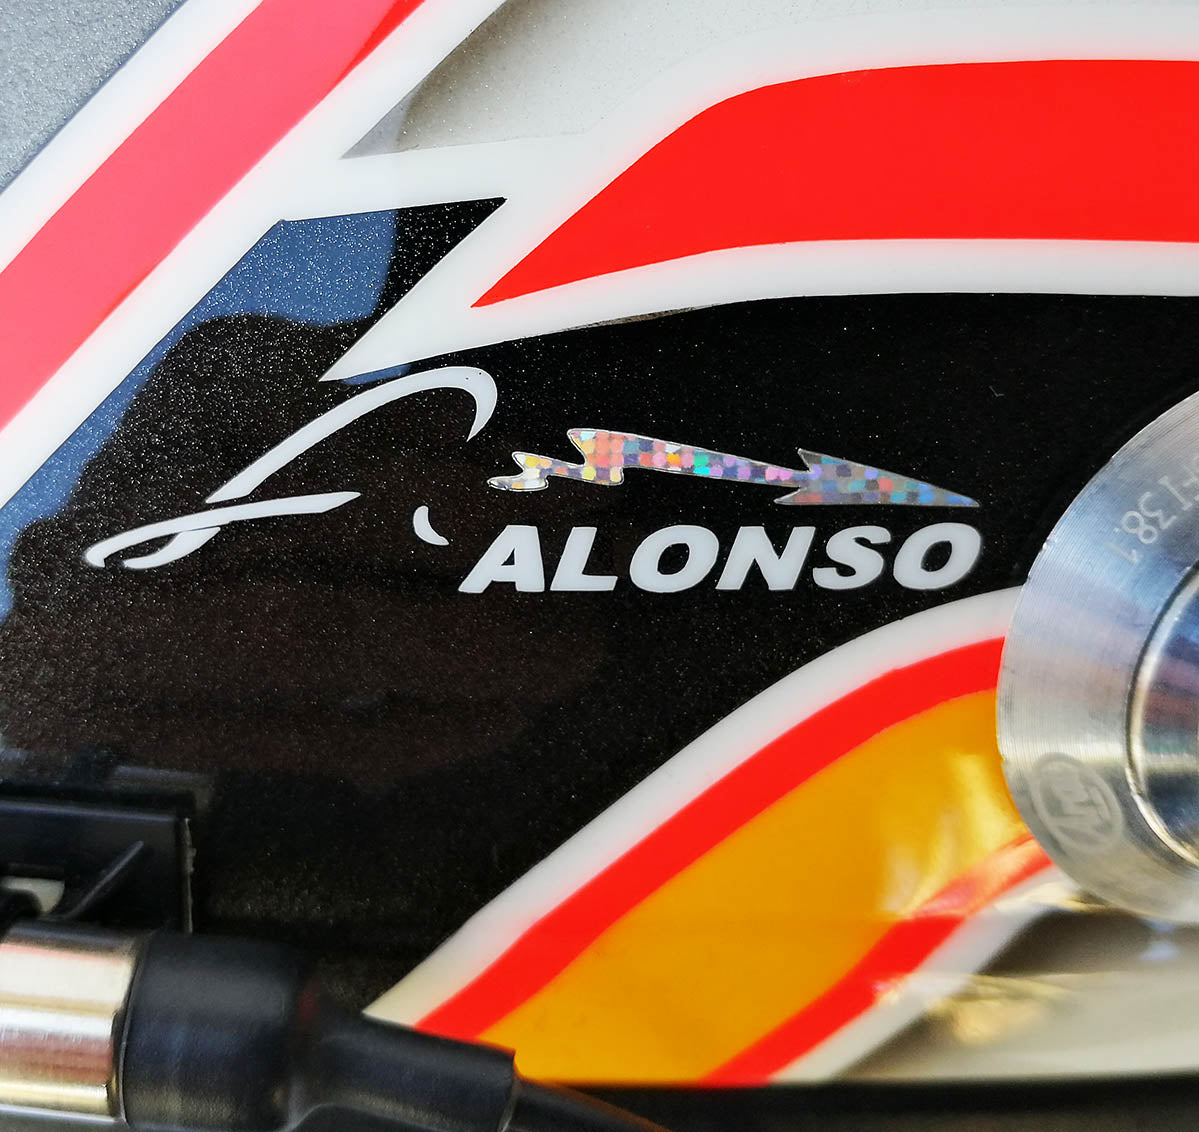 2007 Fernando Alonso Signed Race Used McLaren Mercedes F1 Helmet